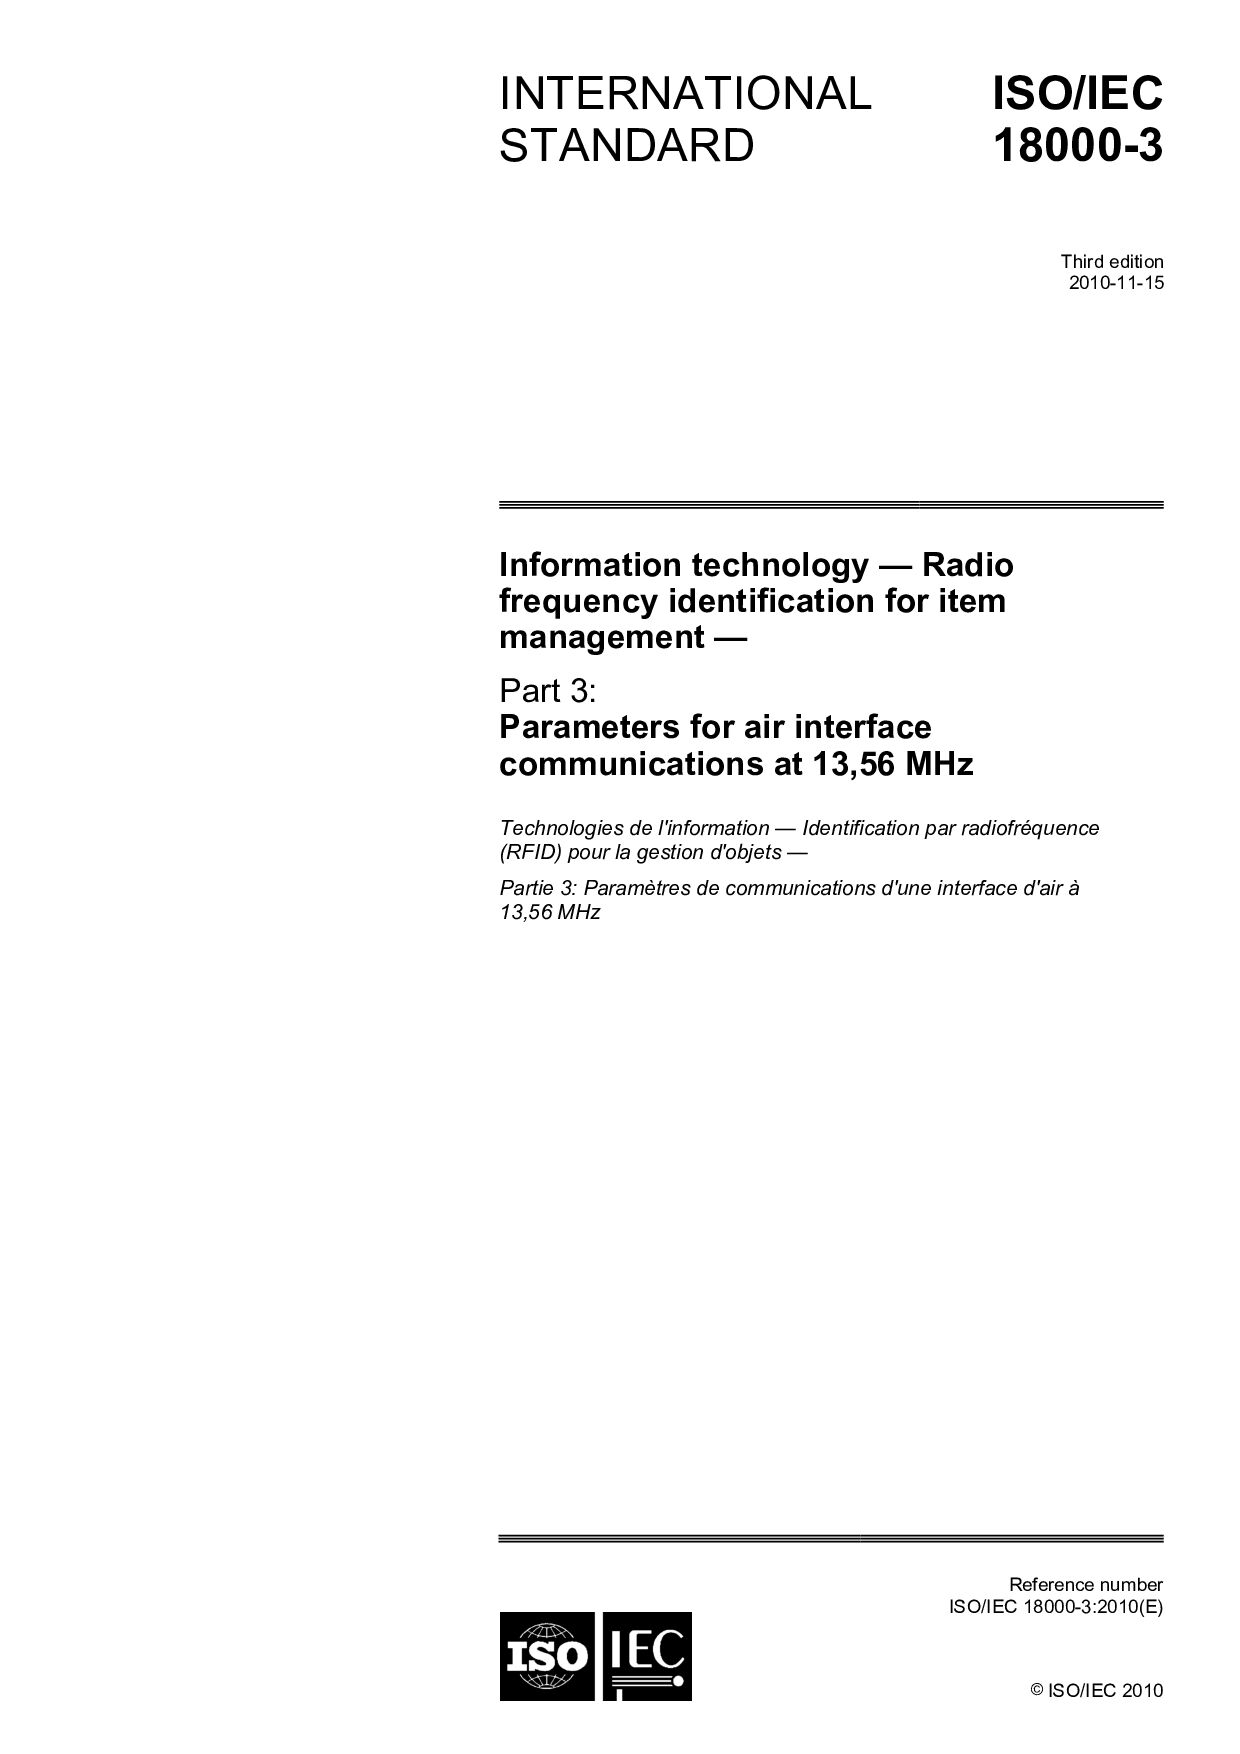 ISO/IEC 18000-3:2010